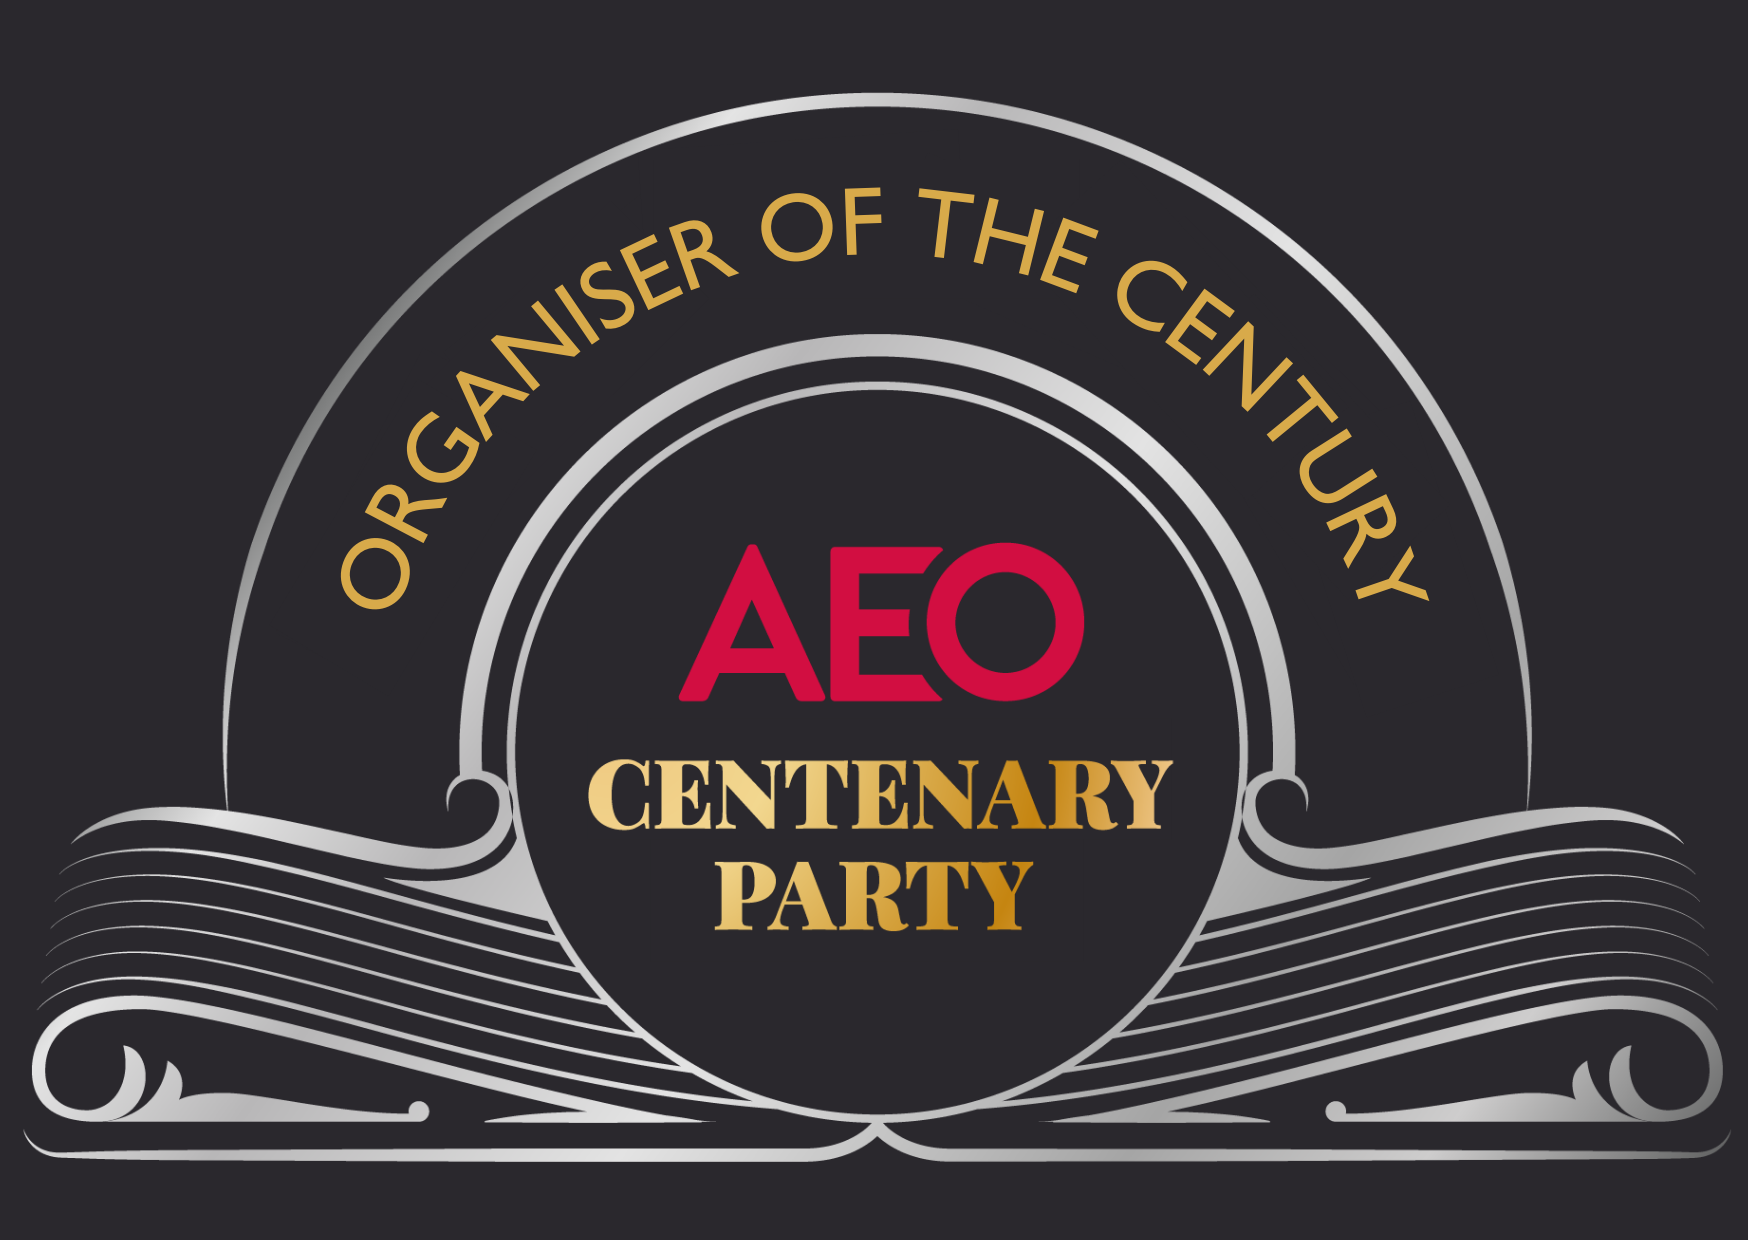 Organiser of the Century